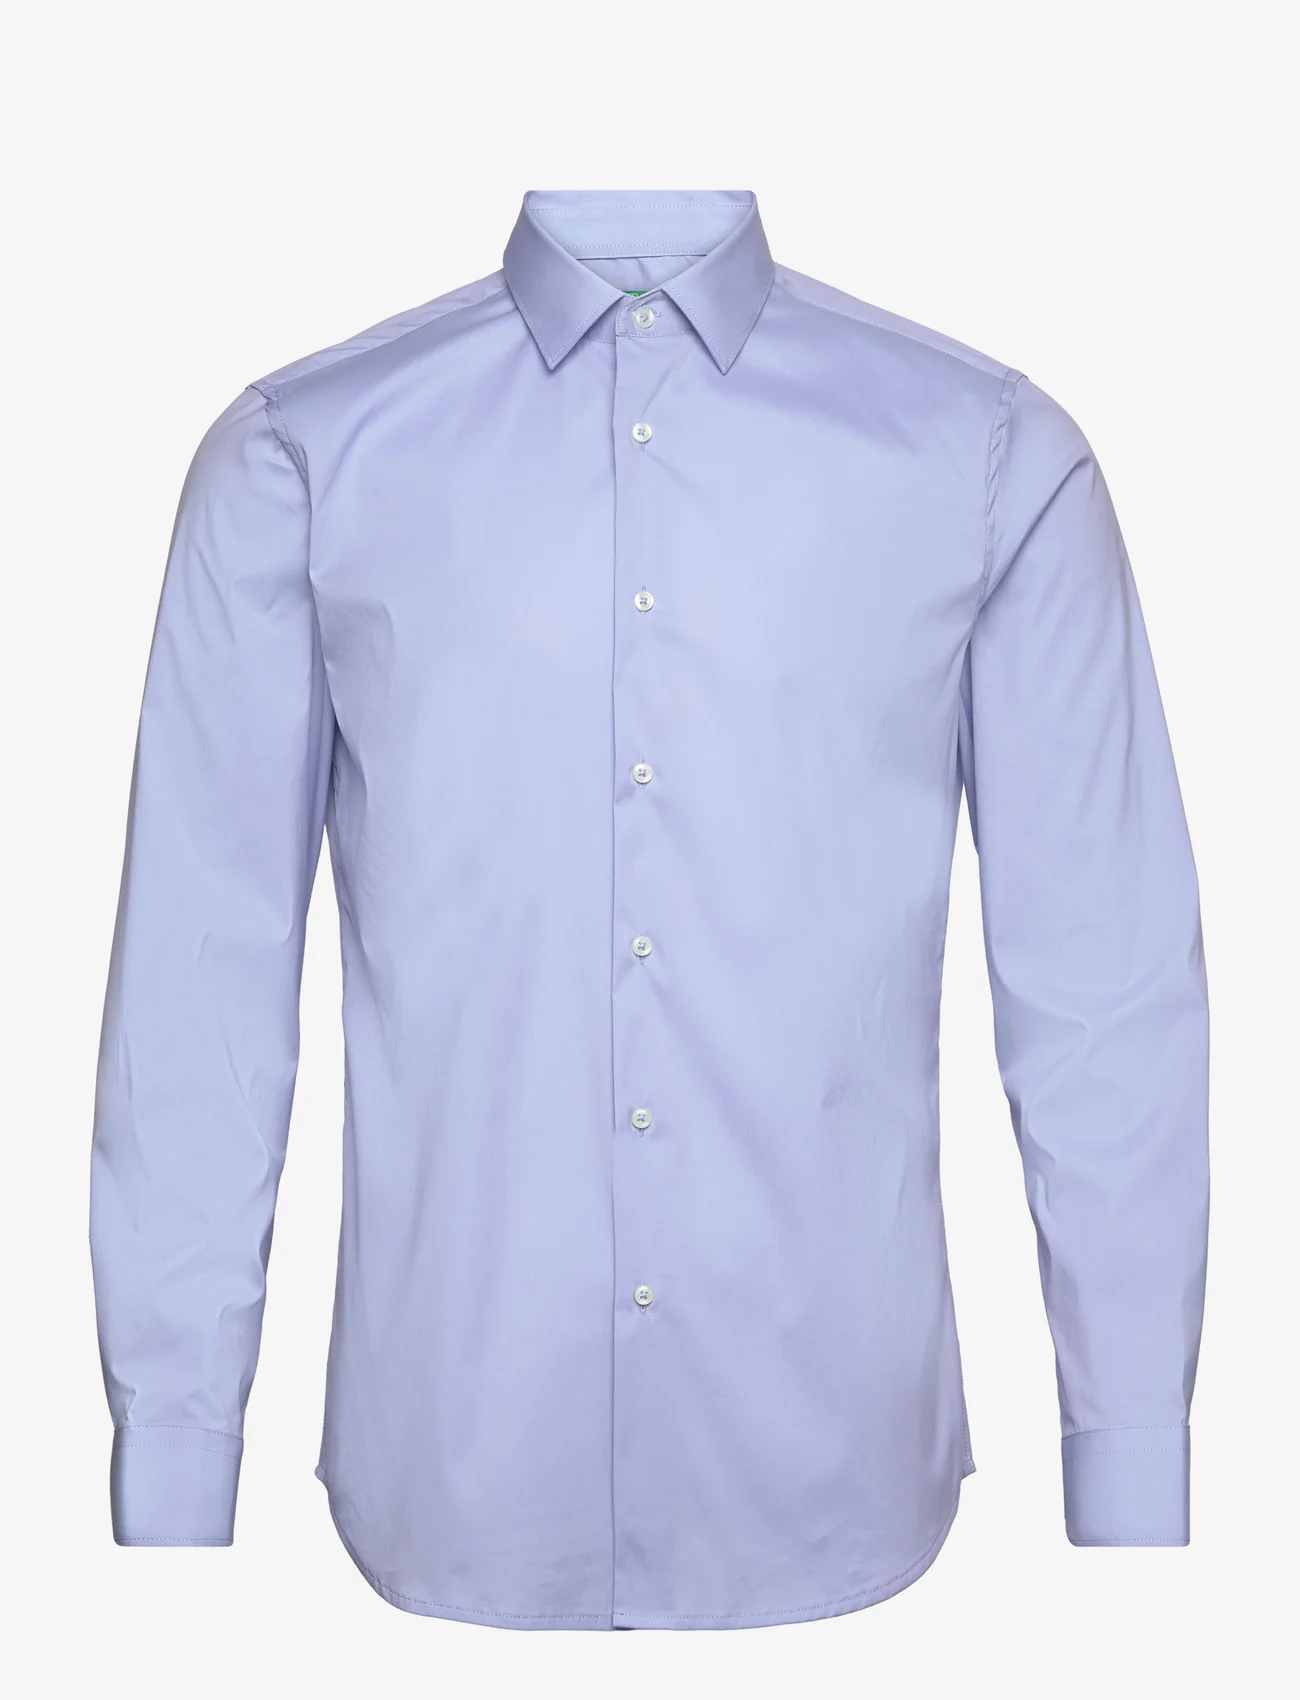 United Colors of Benetton - SHIRT - business skjortor - sky blue - 0